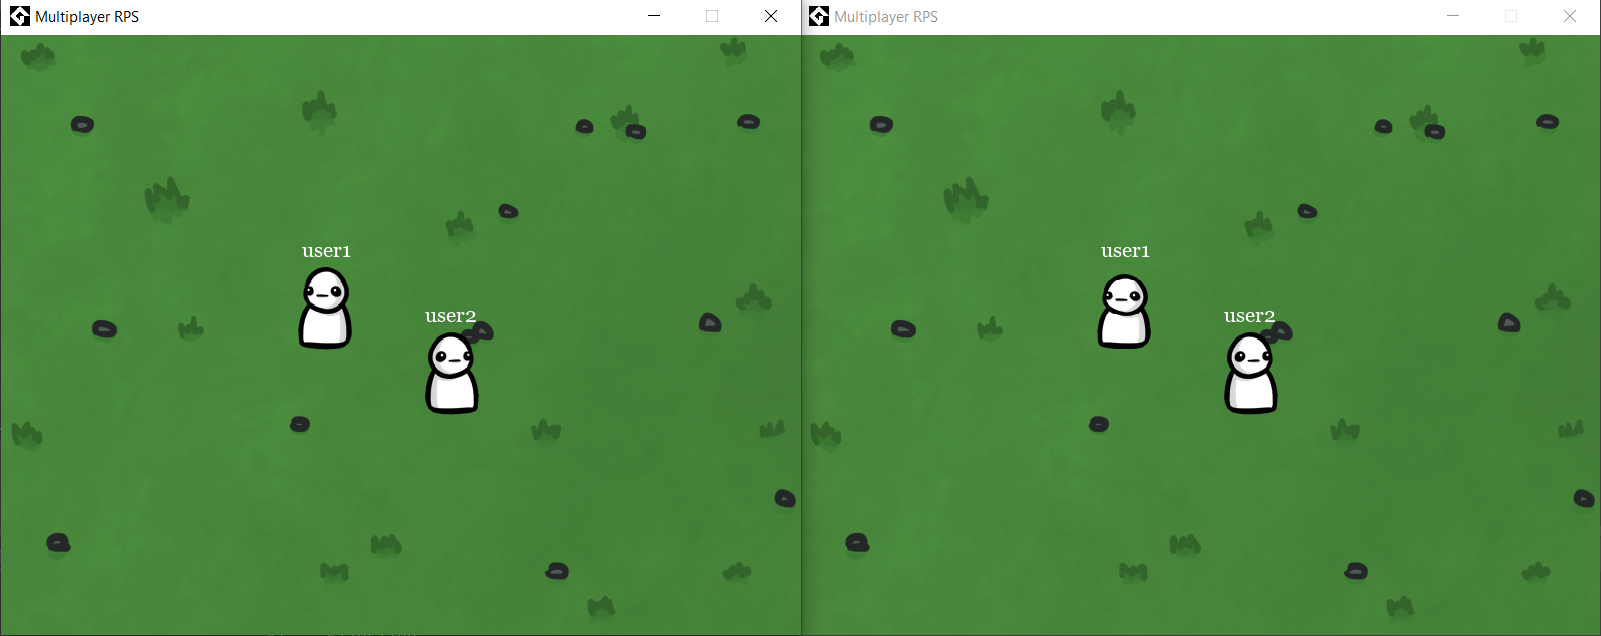 Multiplayer game screenshot